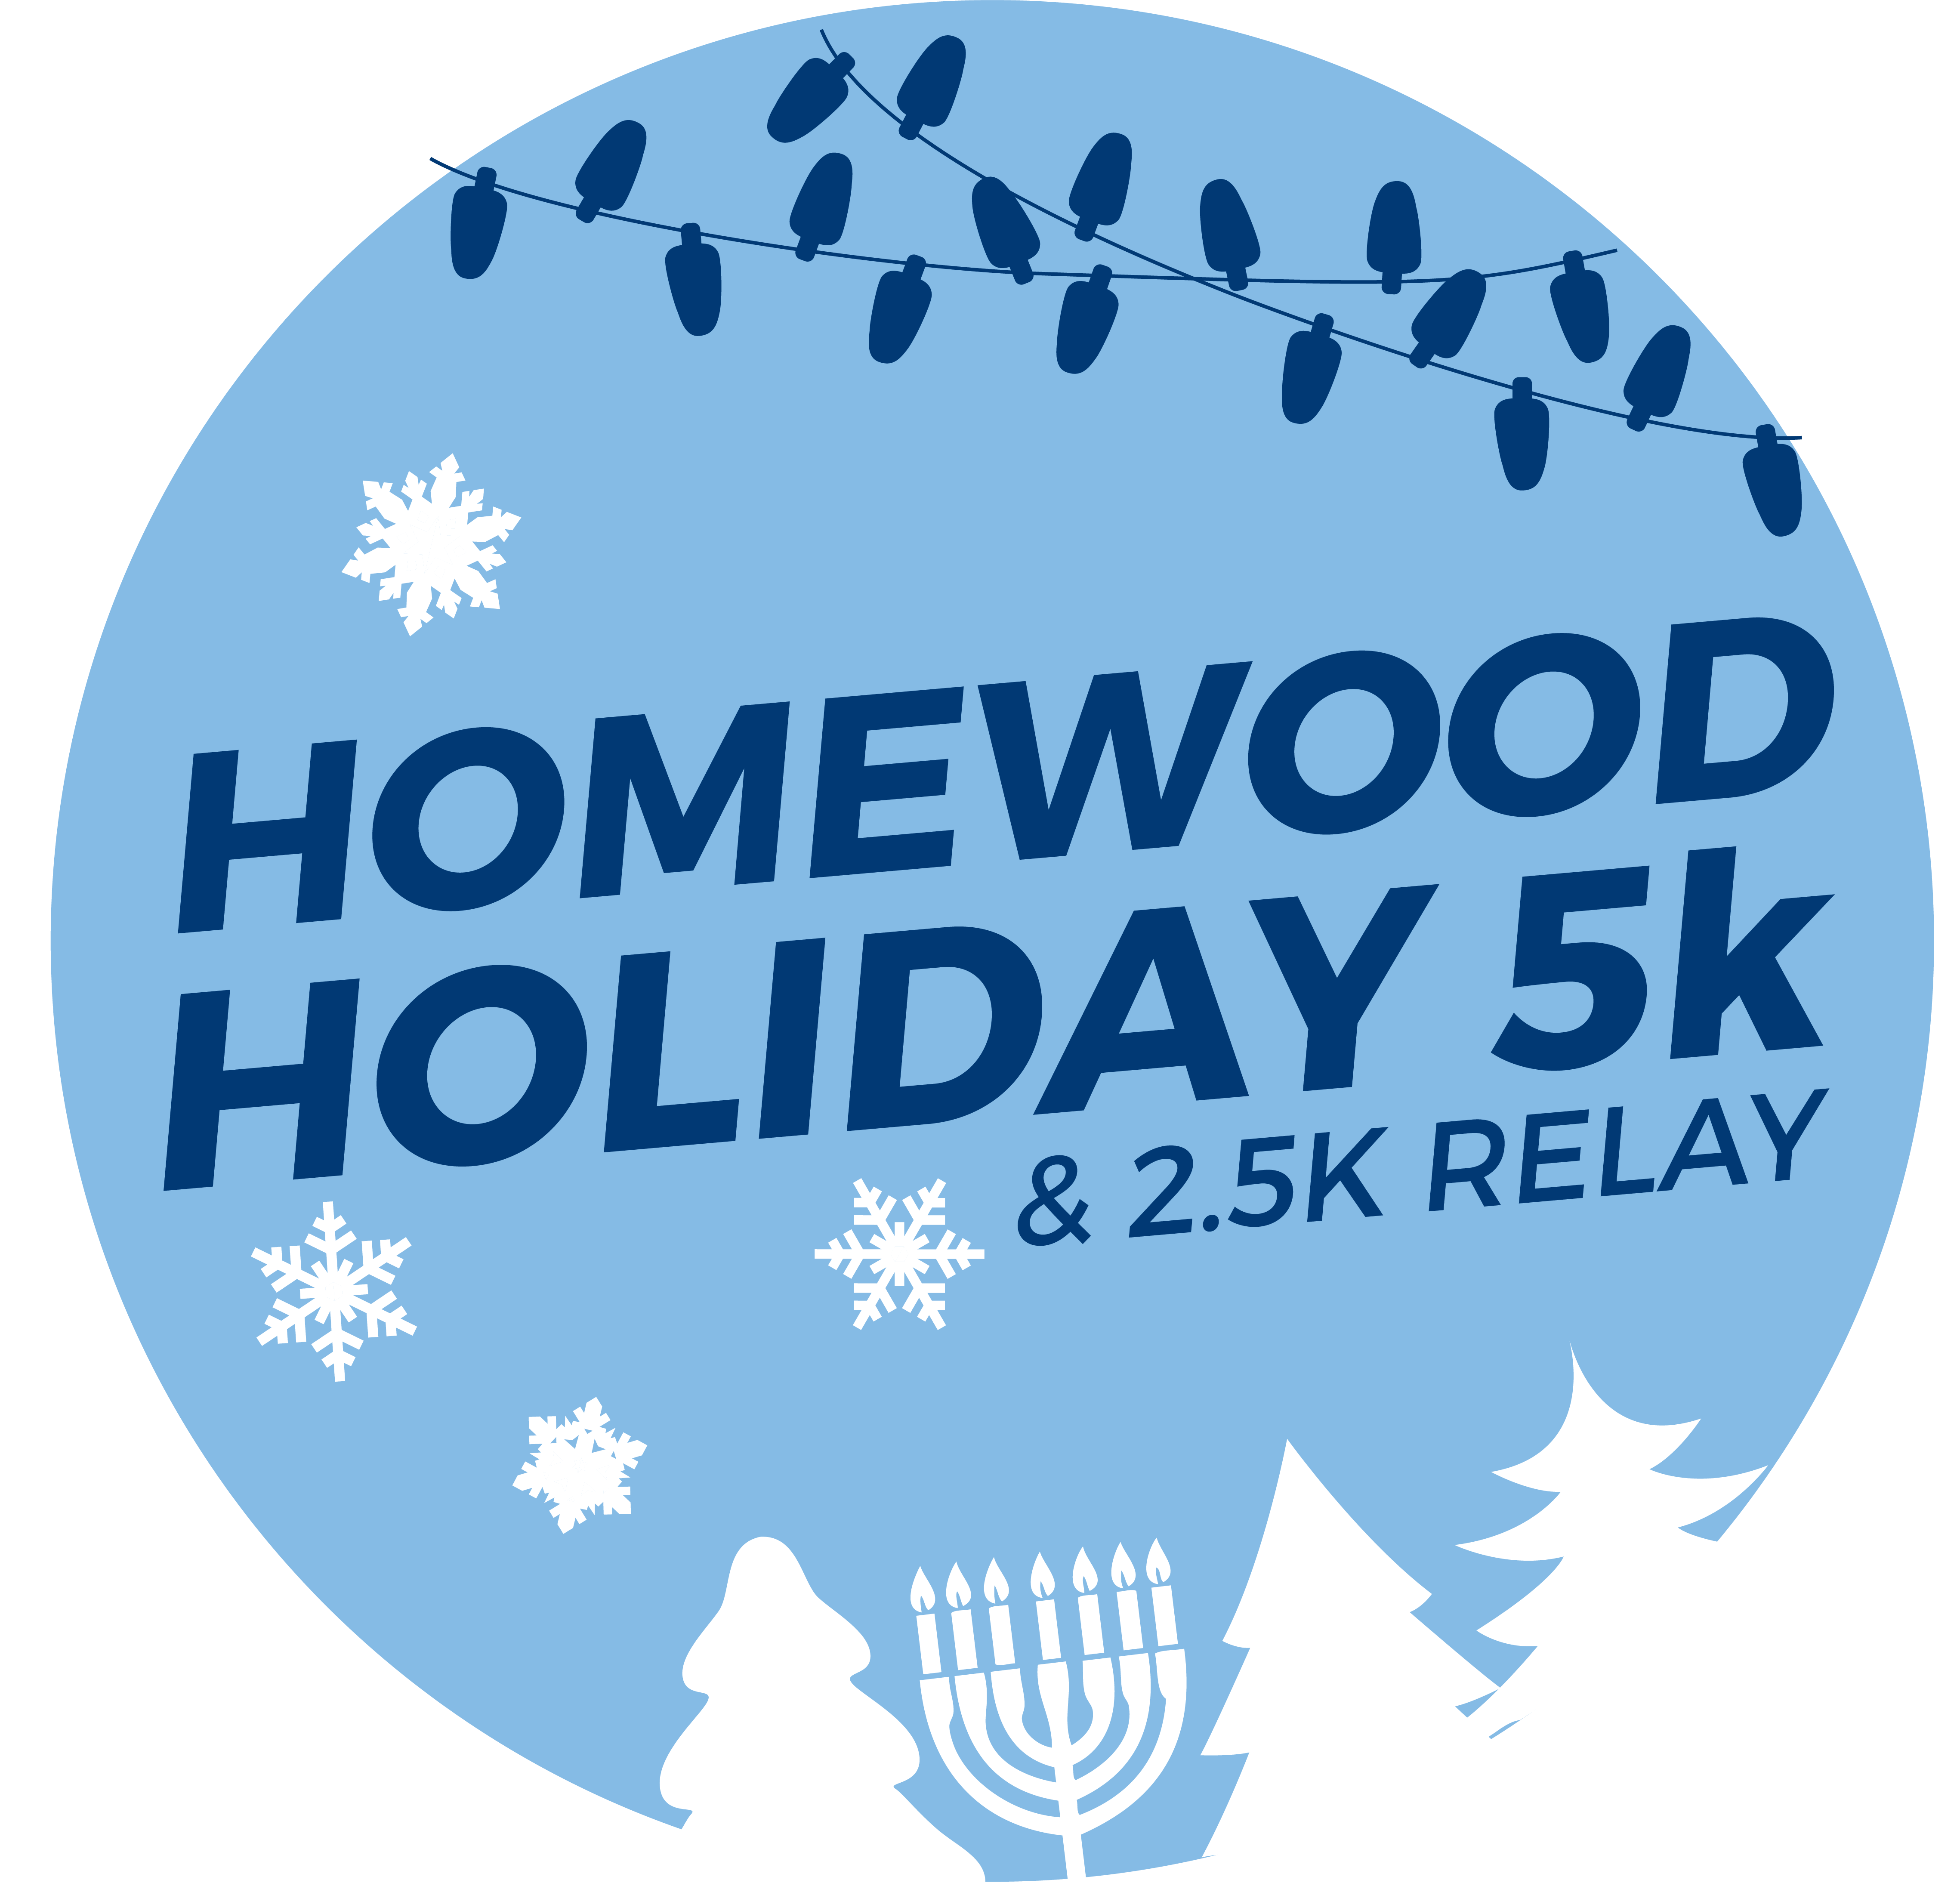 5th Annual Homewood Holiday 5k